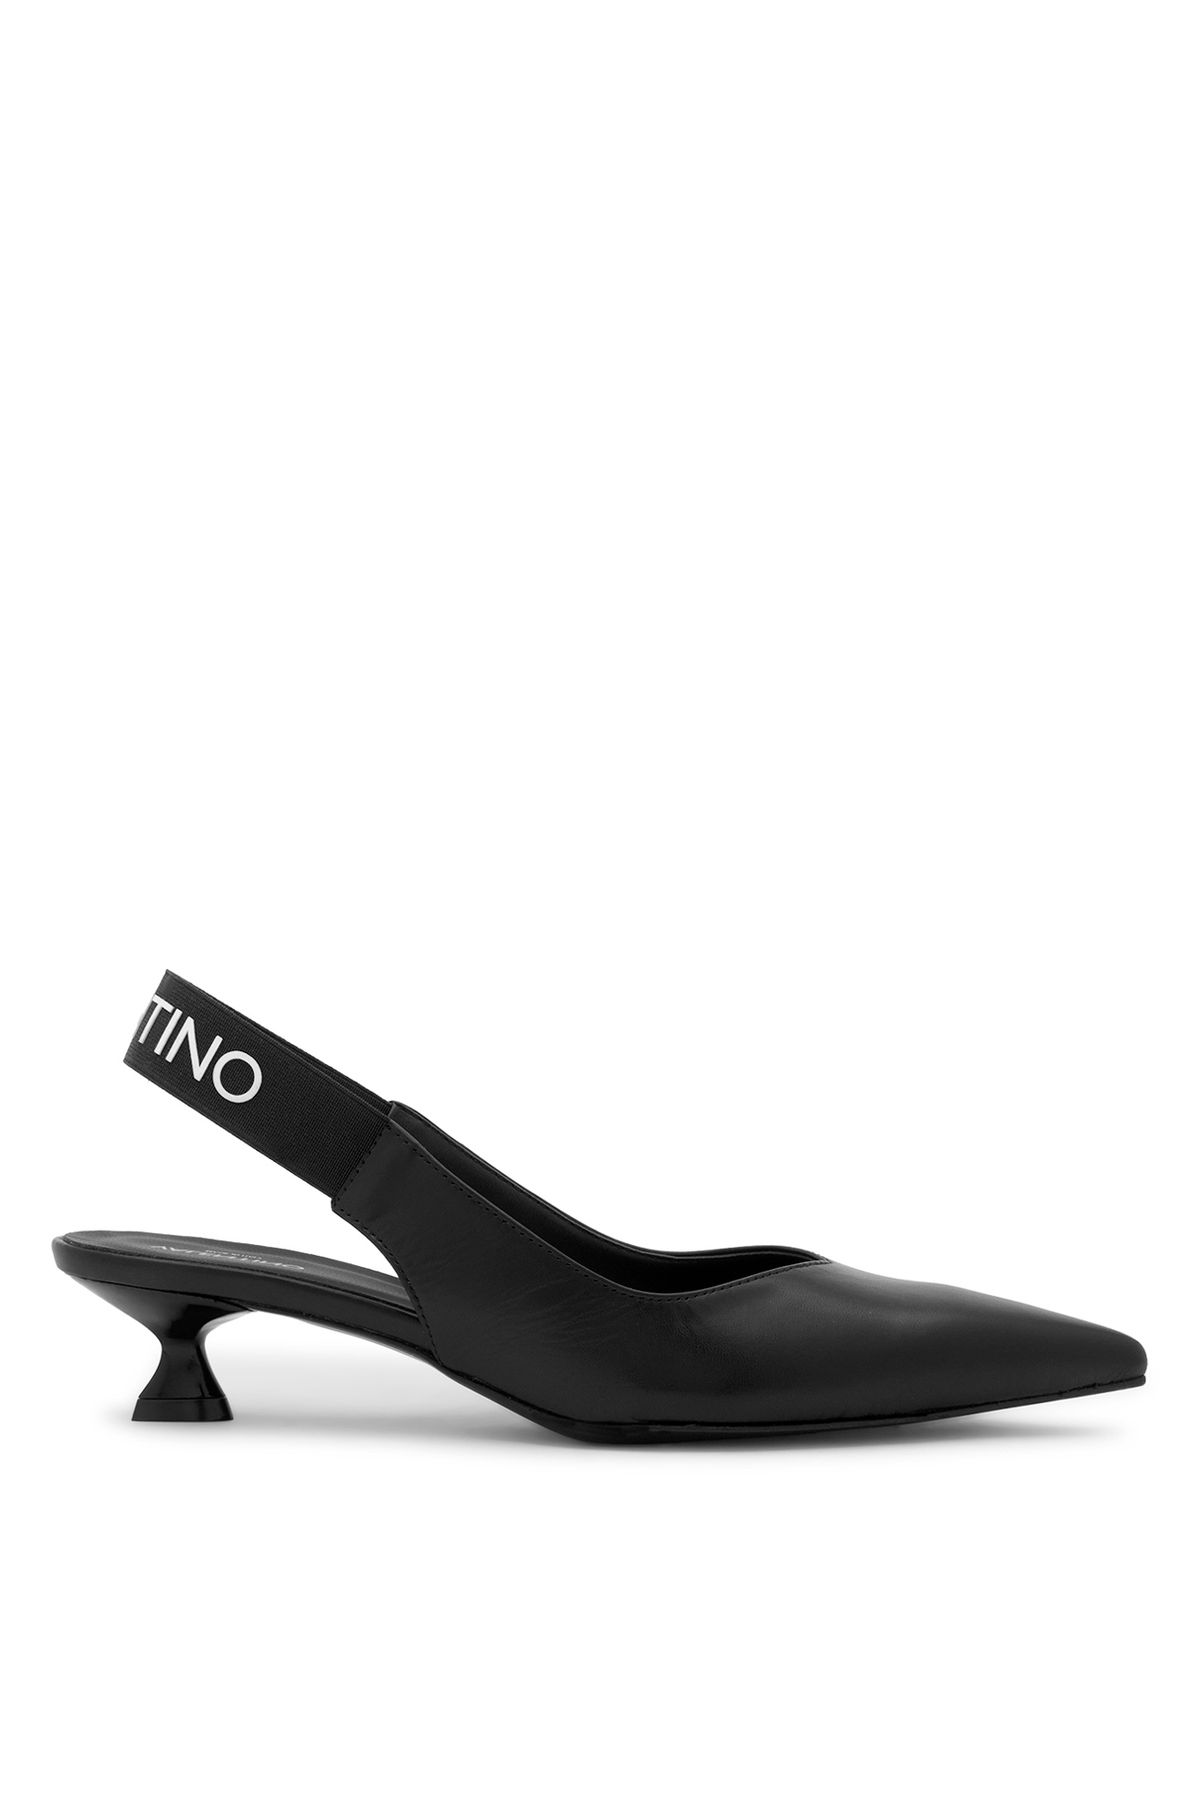 Valentino Deri Siyah Kadın Topuklu Ayakkabı 93T2102NAP550